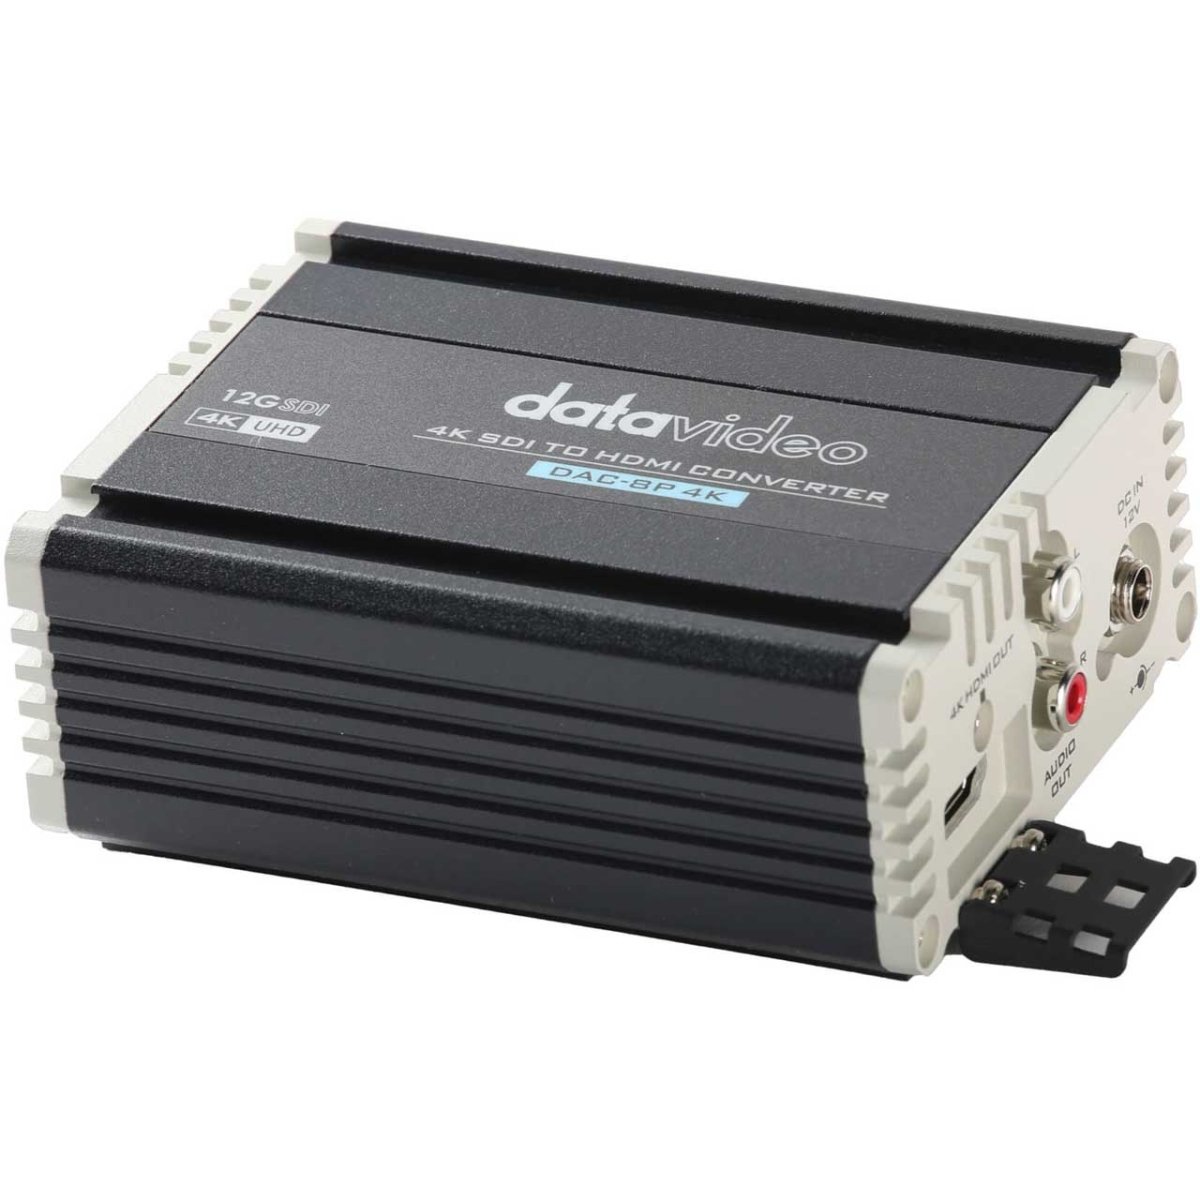 Picture of Datavideo DV-DAC8P-4K DAC8P-4K 4K SDI to HDMI Converter - 4K50-60 to 4K HDMI